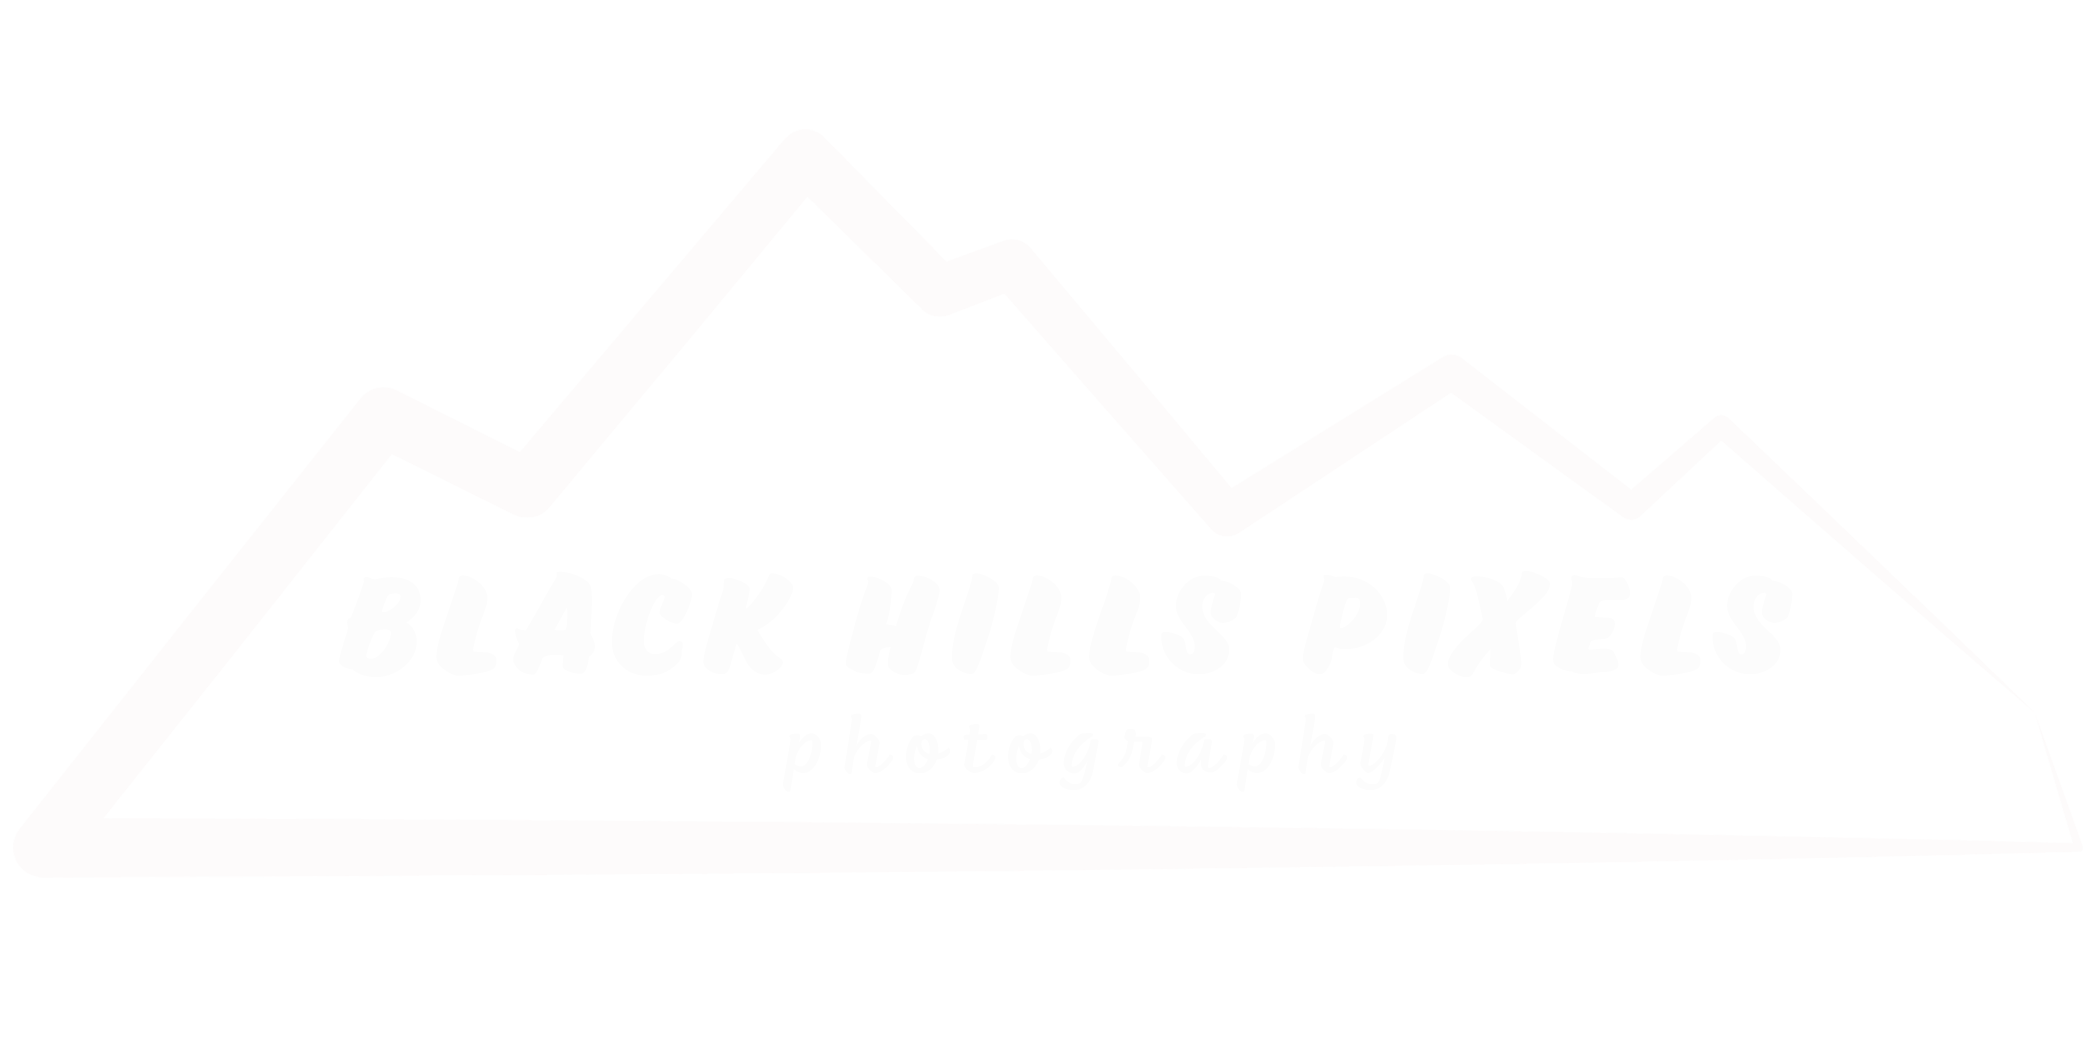 Black Hills Pixels Phototgraphy